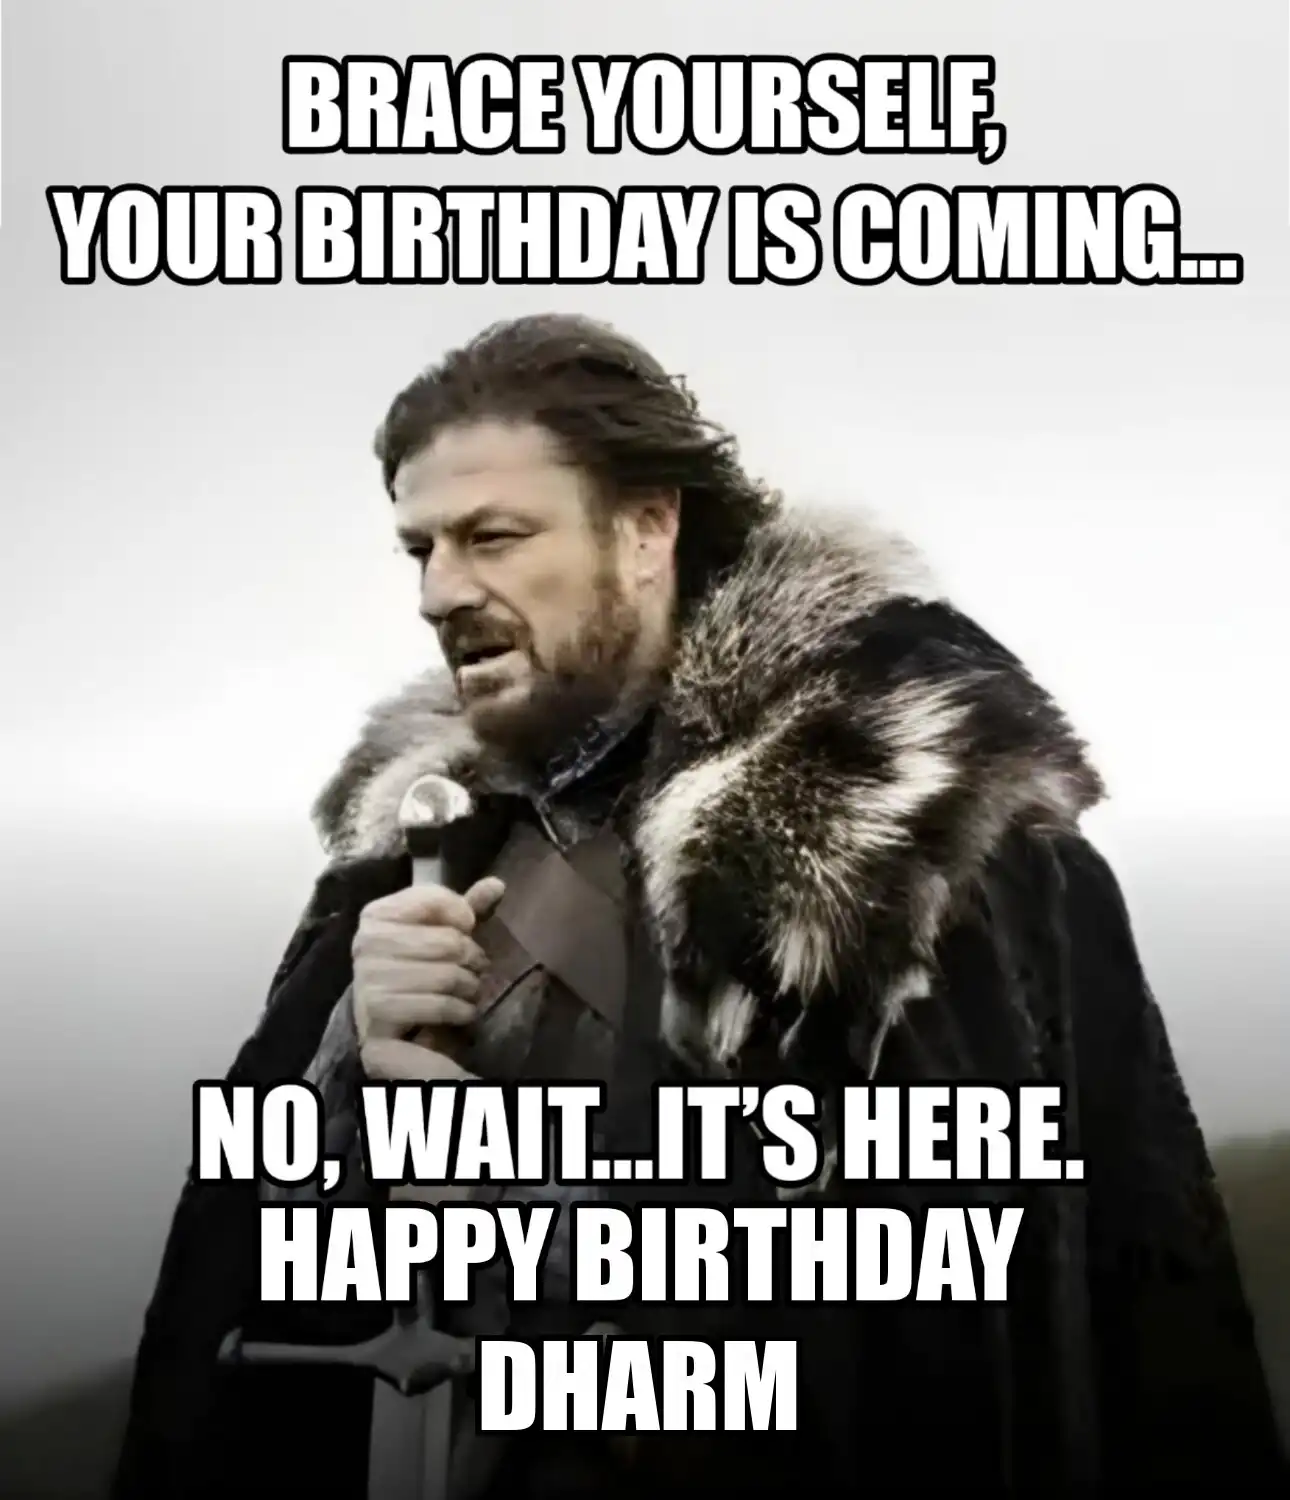 Happy Birthday Dharm Brace Yourself Your Birthday Is Coming Meme